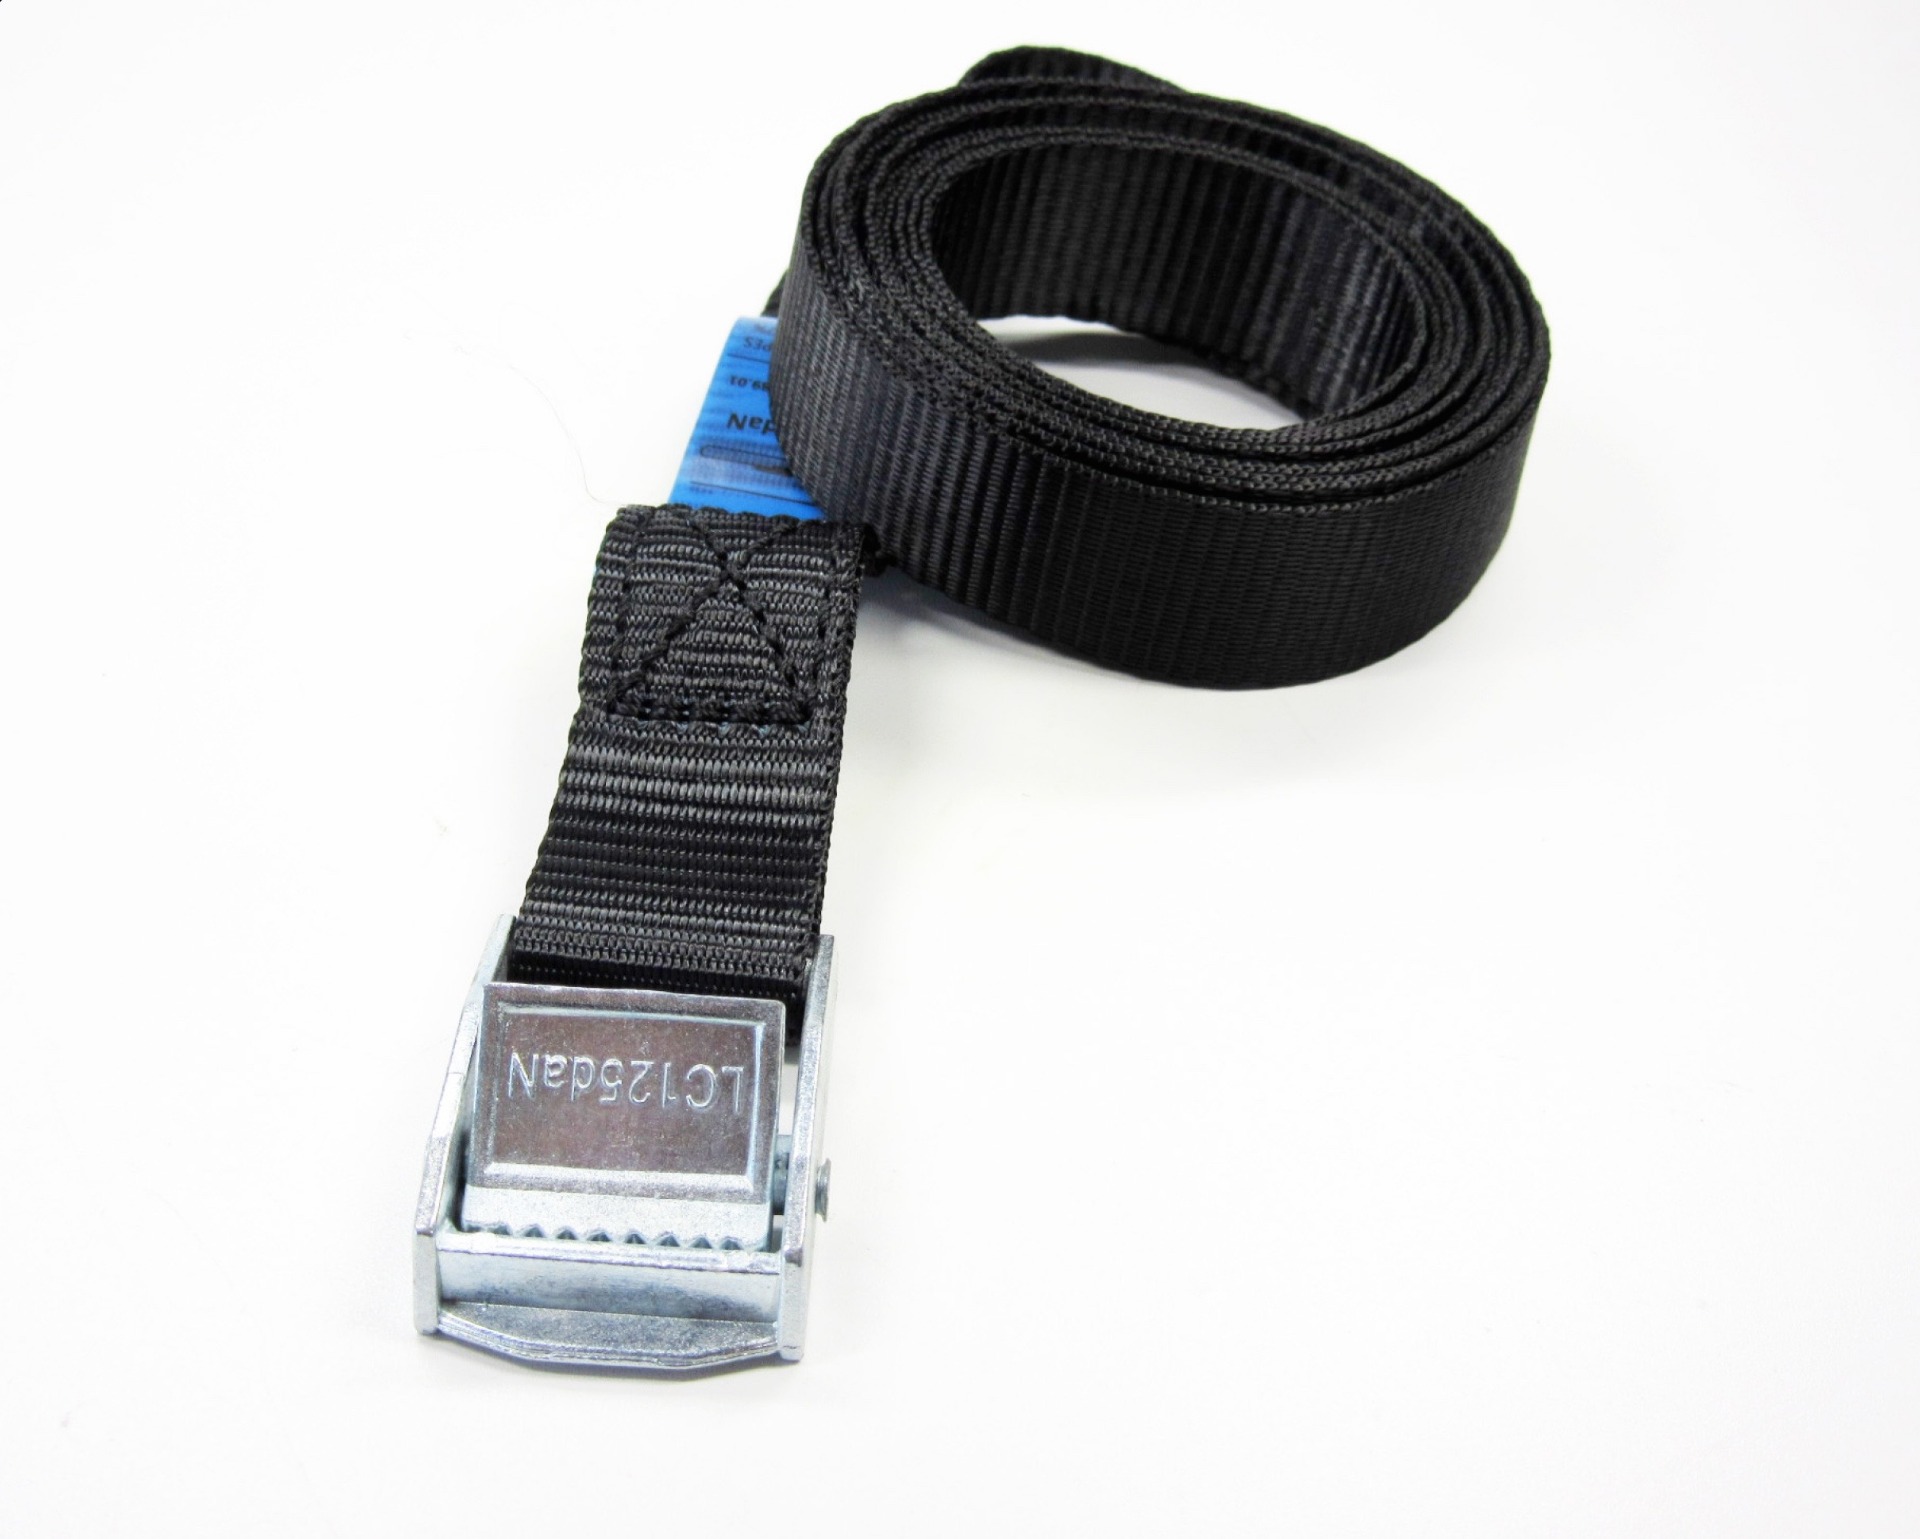 Spanband zwart 25 mm 8 meter met - Spanband zwart 25 mm met klemsluiting - Spanband Kopen? Spanband.net. De Spanband specialist.